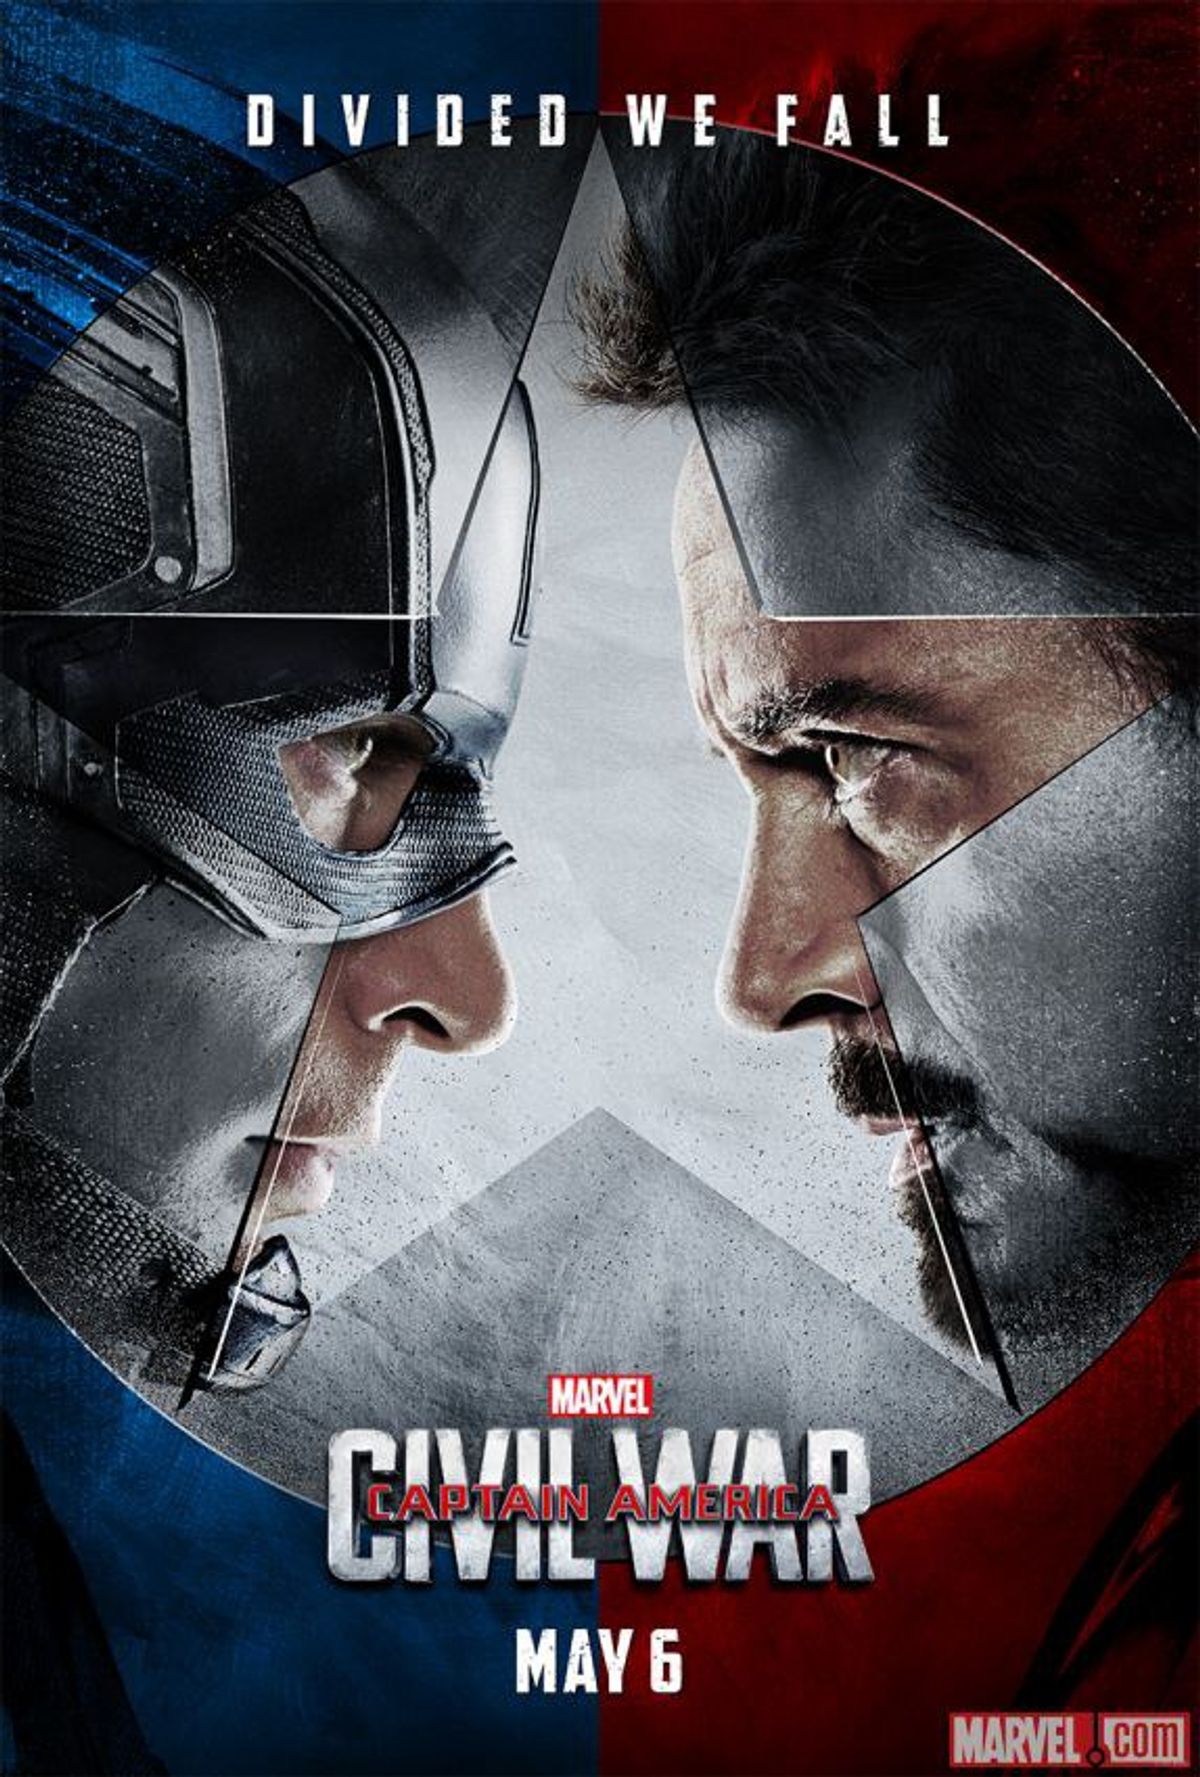 Marvel's "Civil War:" Divided We Fall